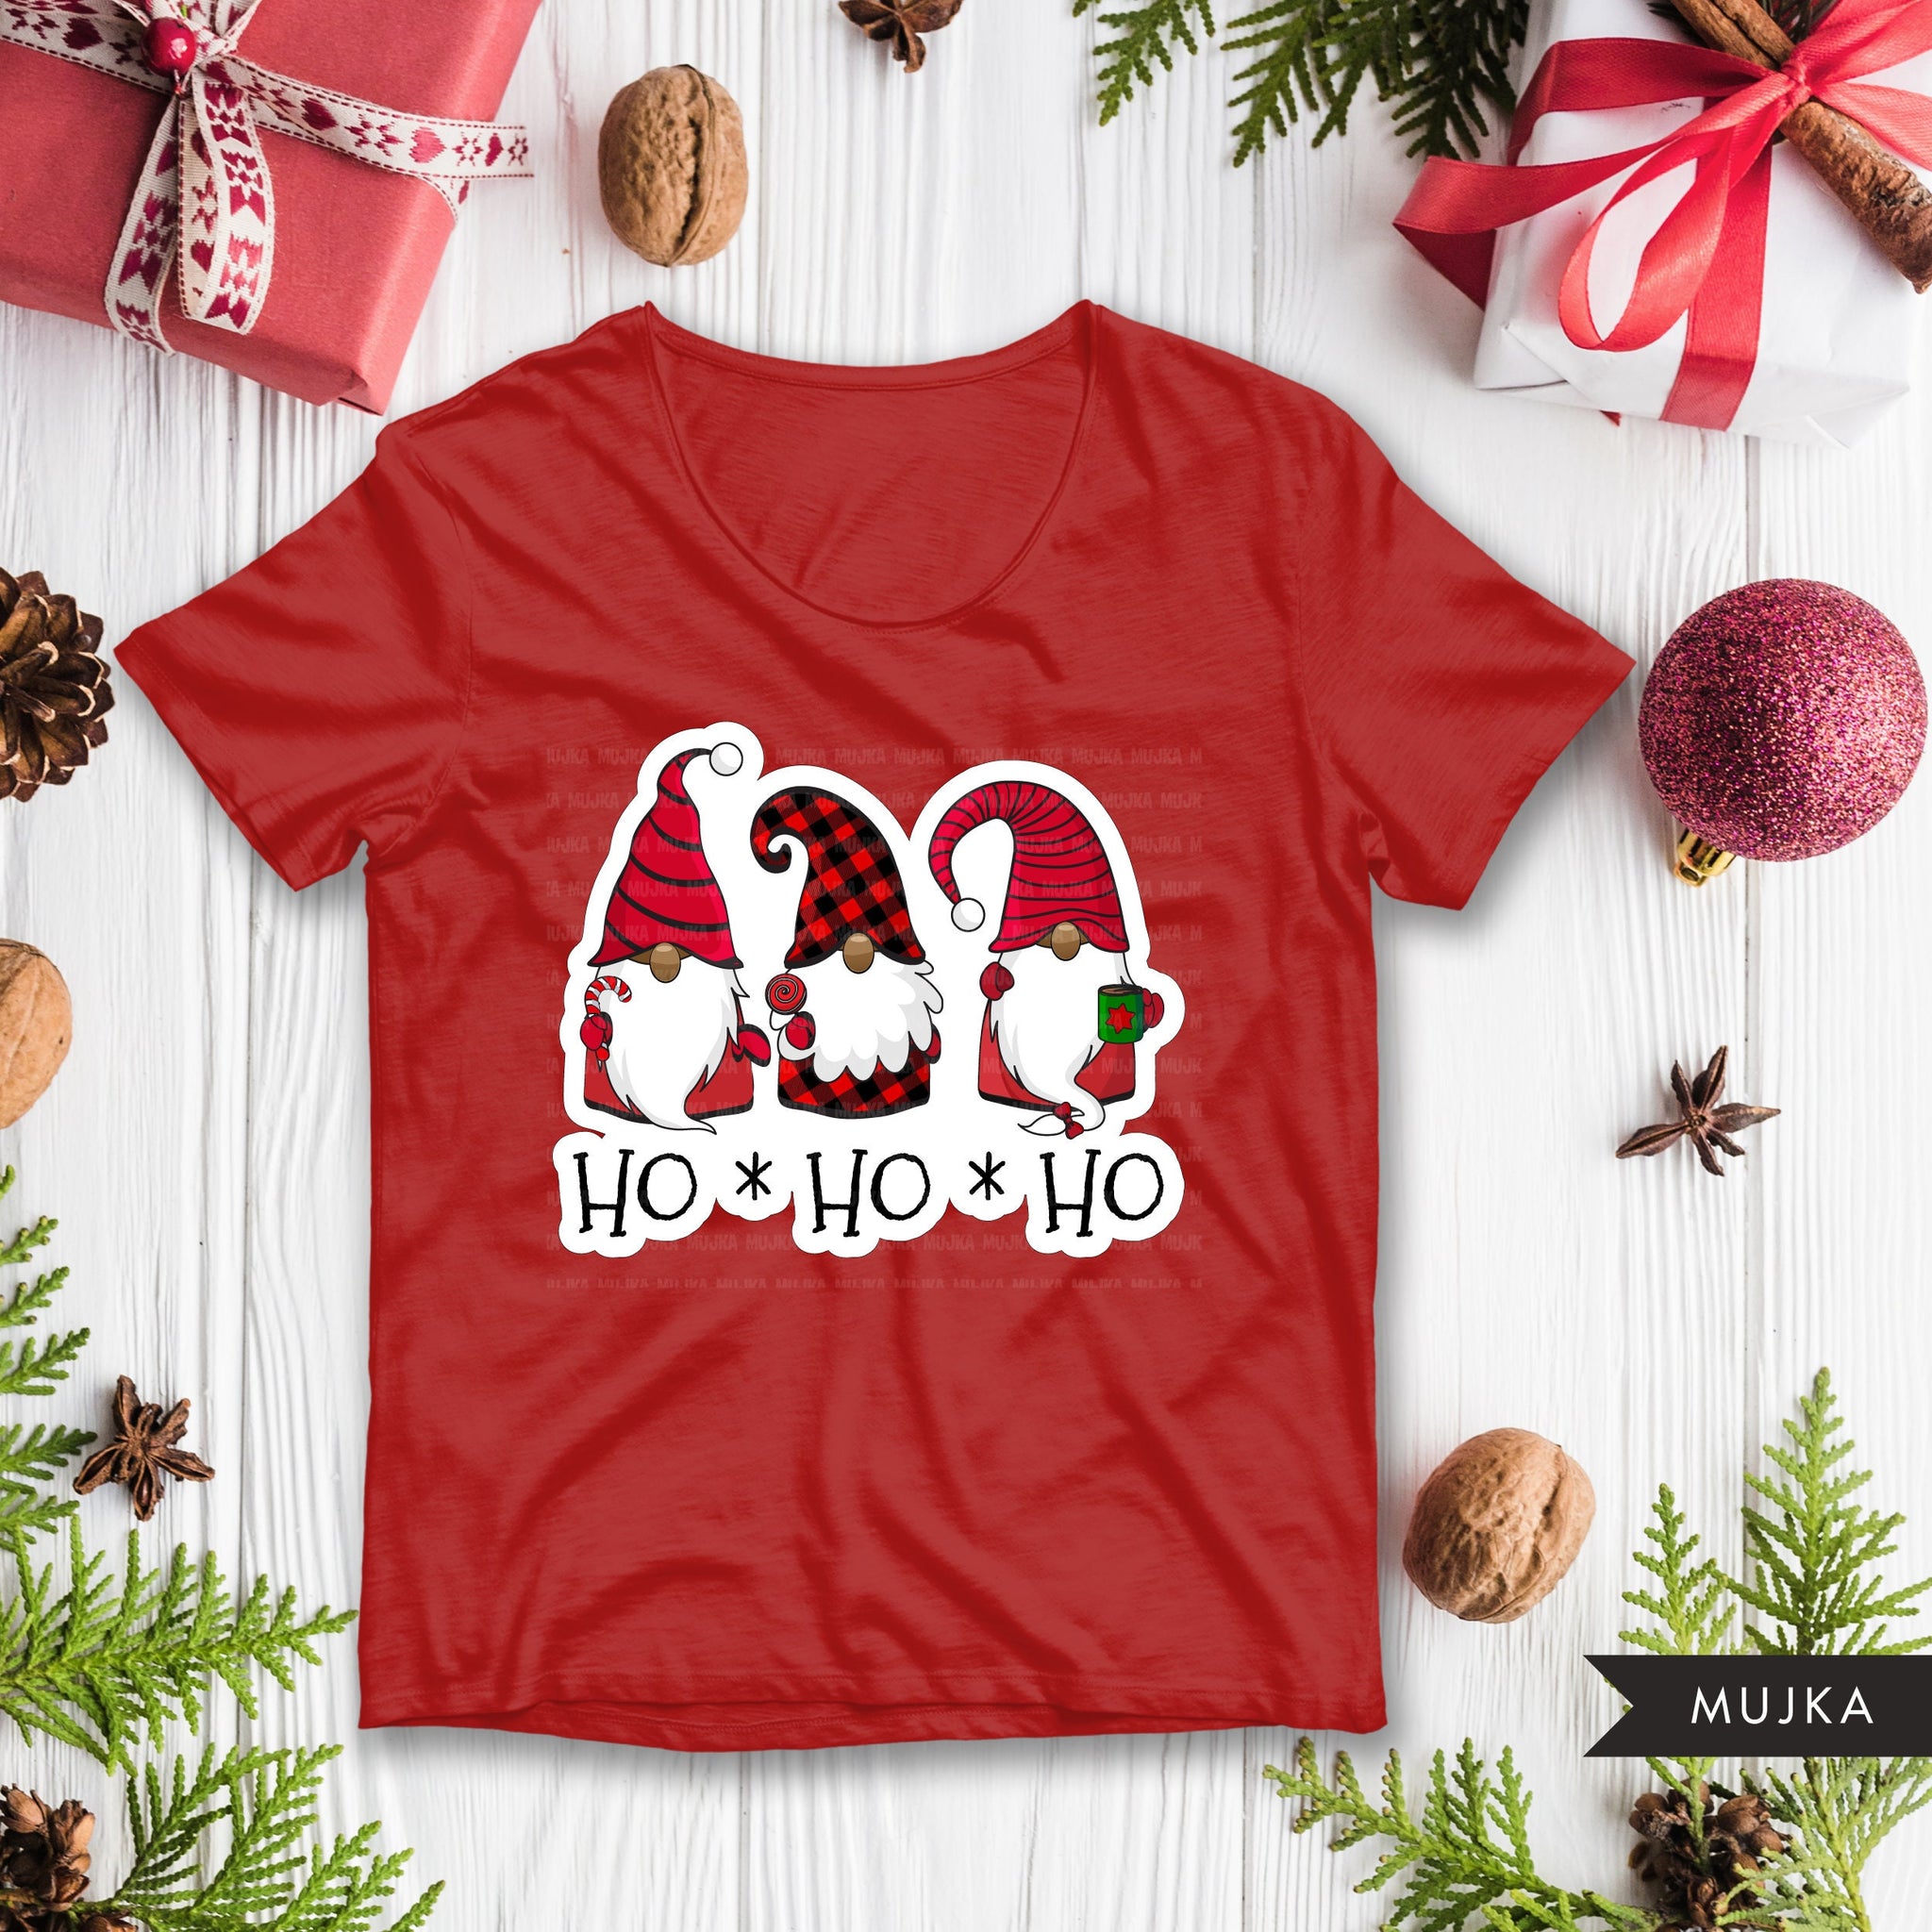 Christmas gnomes png, Christmas gnomes shirt, gnome clipart, gnome sublimation digital designs, merry Christmas png, ho ho ho png, Santa png